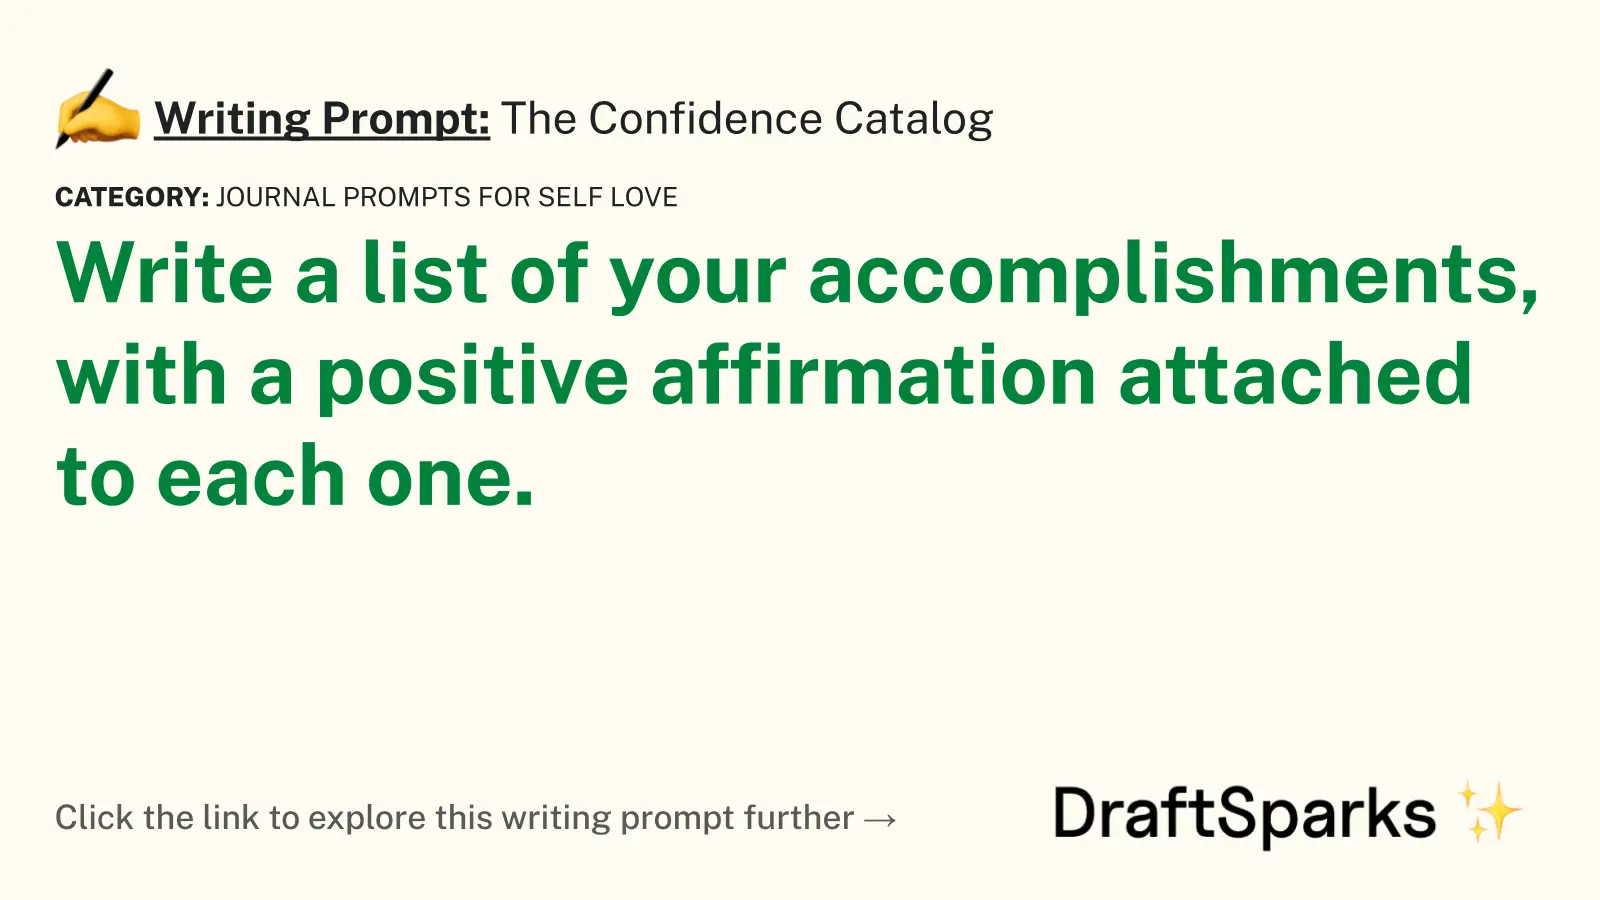 The Confidence Catalog